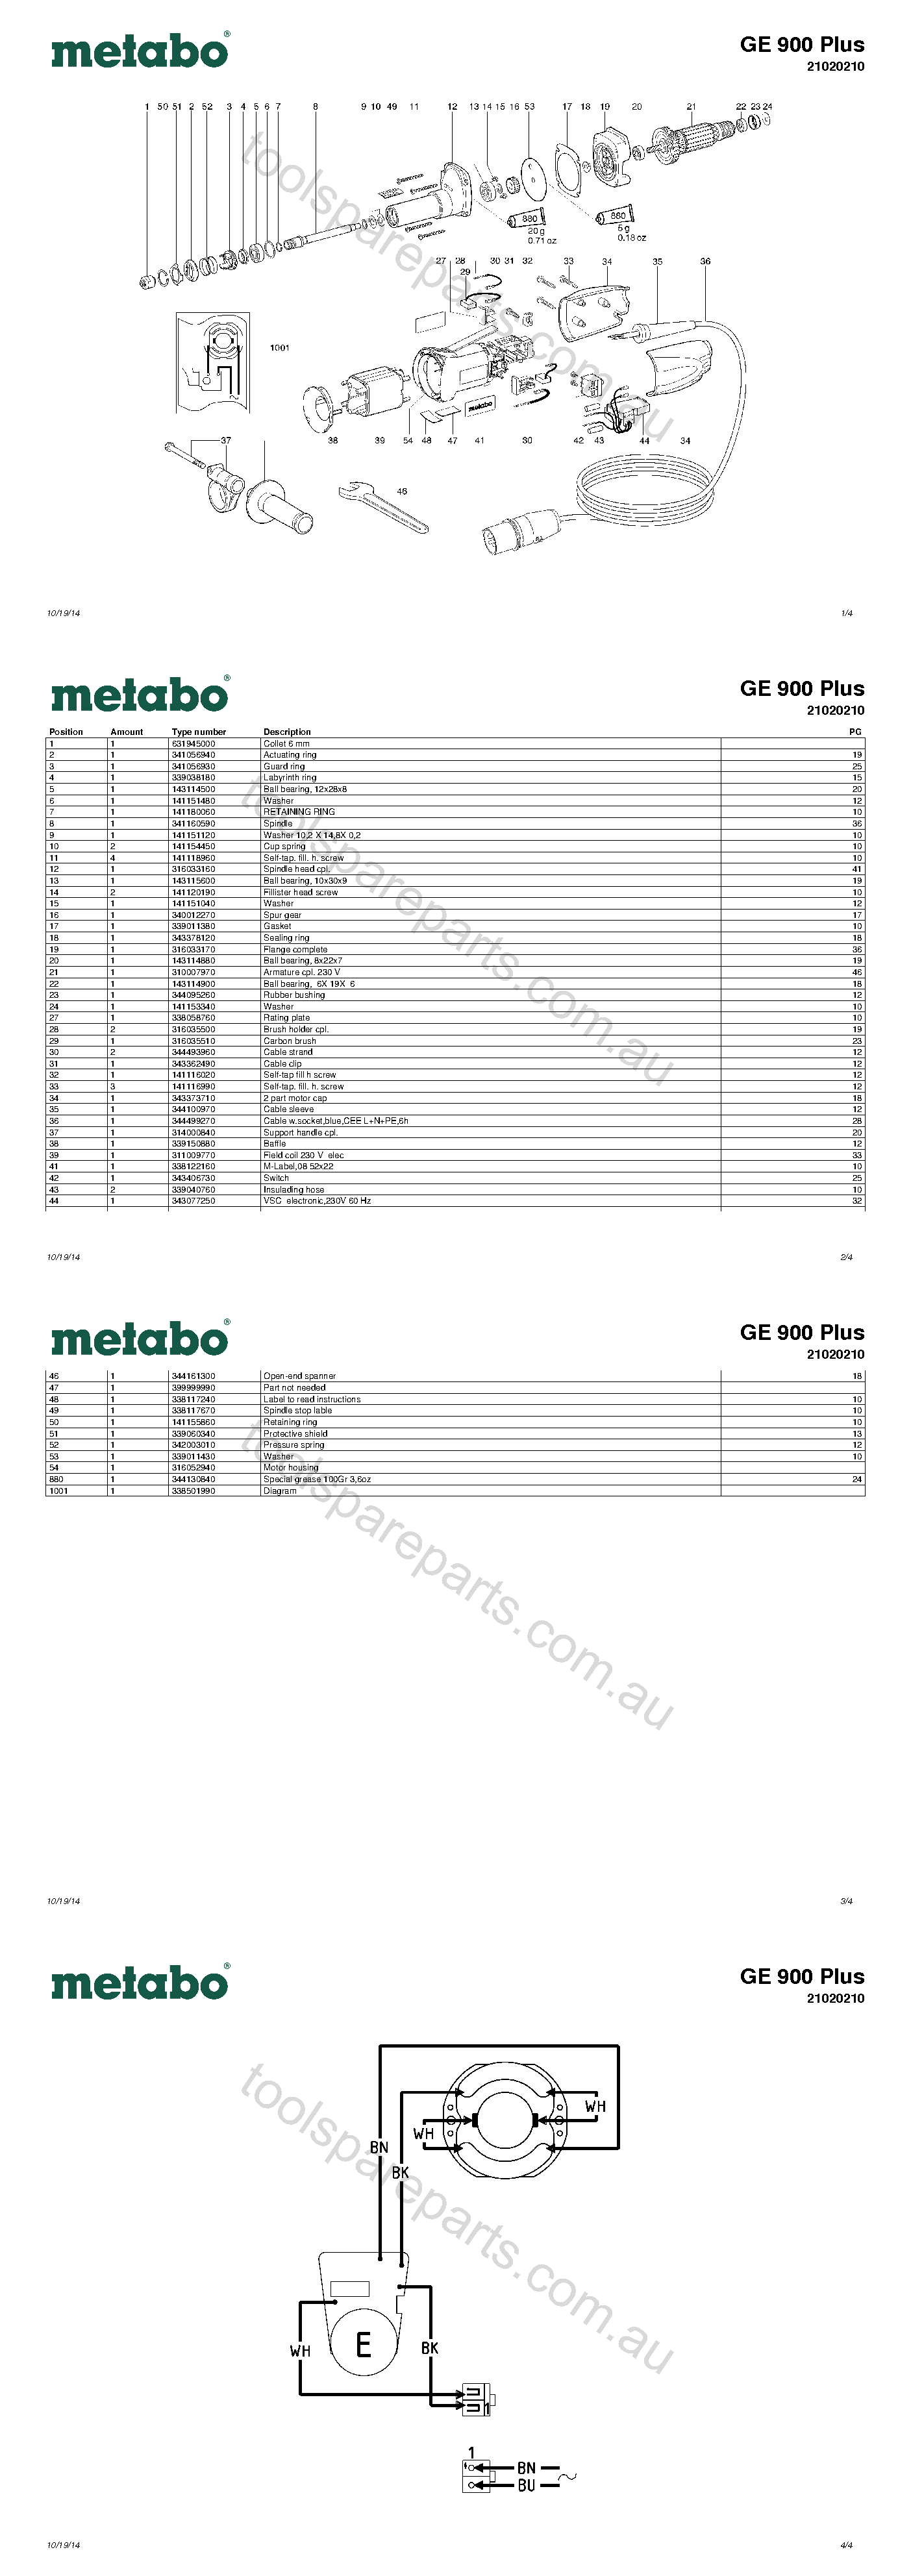 Metabo GE 900 Plus 21020210  Diagram 1